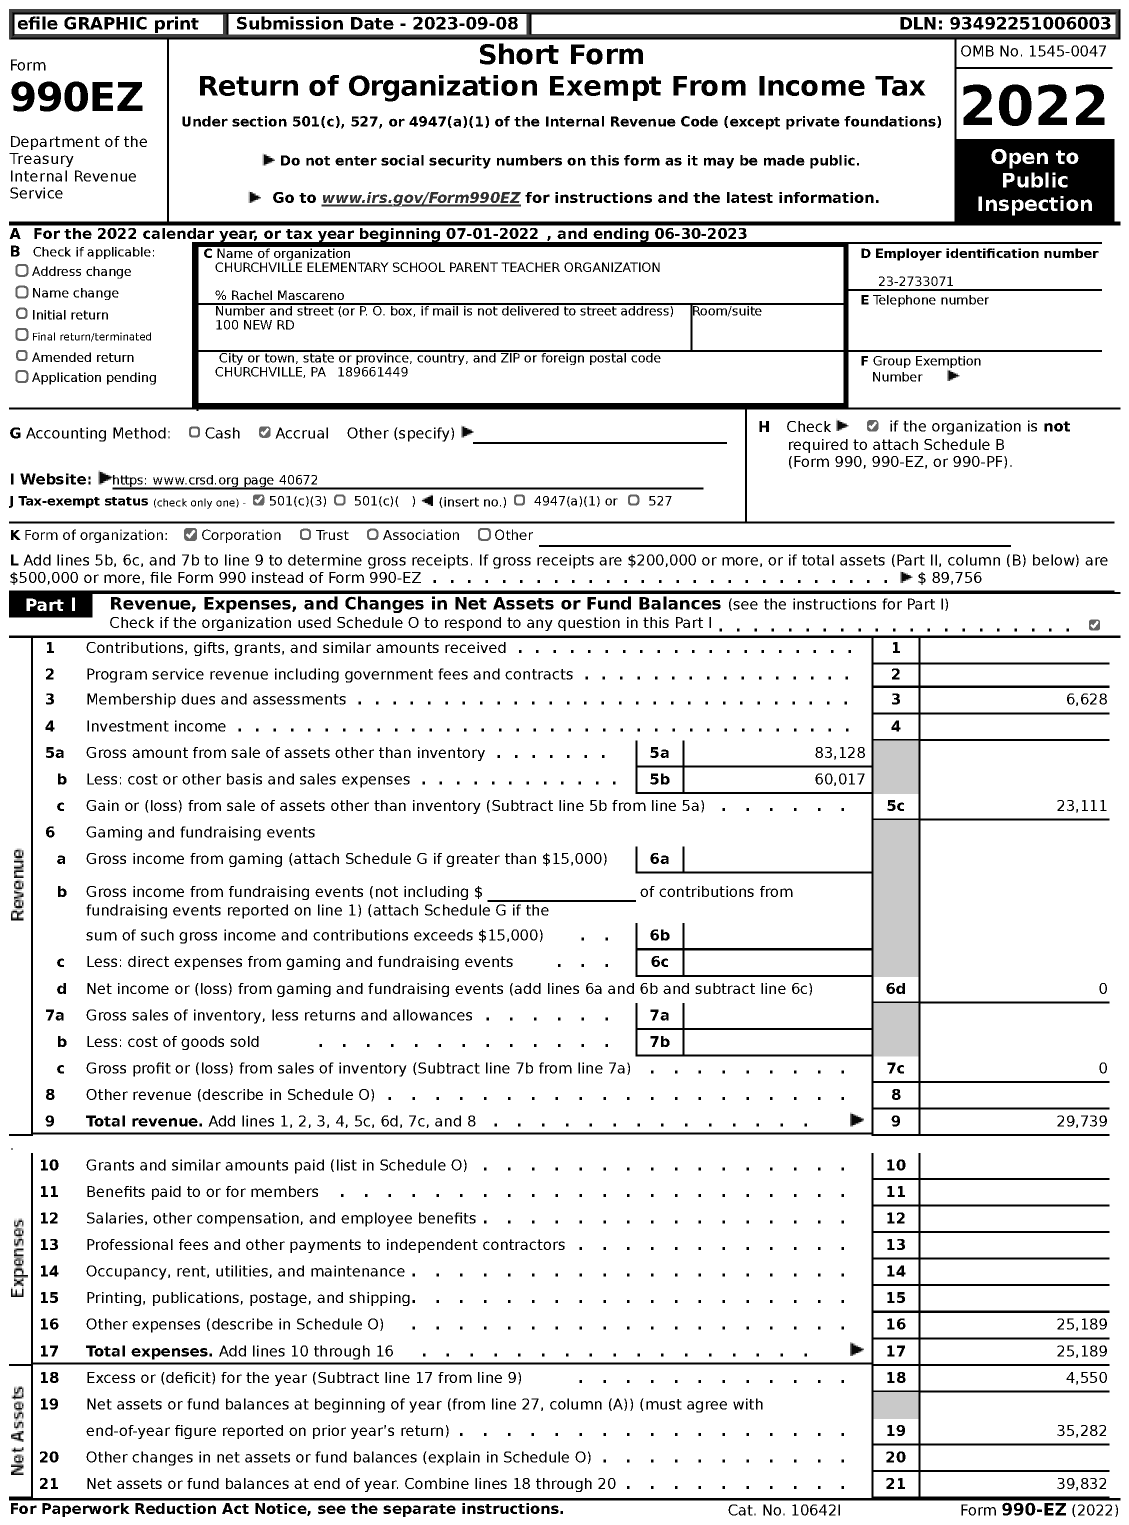 Image of first page of 2022 Form 990EZ for Churchville Elementary School Parent Teacher Organization